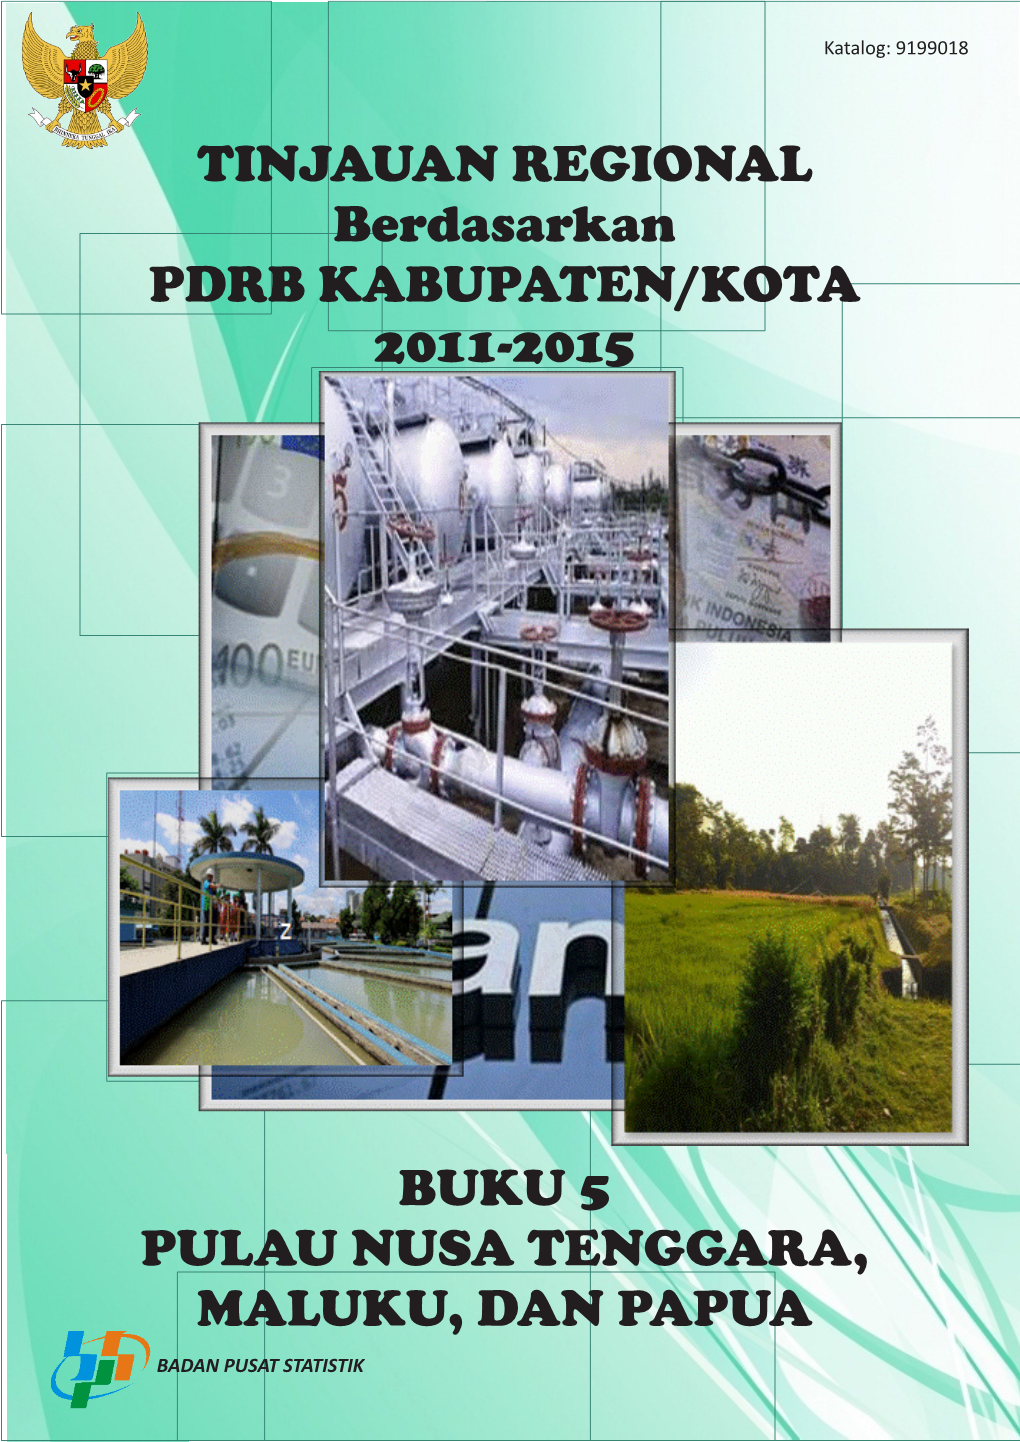 Regional Overview Based on 2011-2015 GDRP, Book 5 Nusa